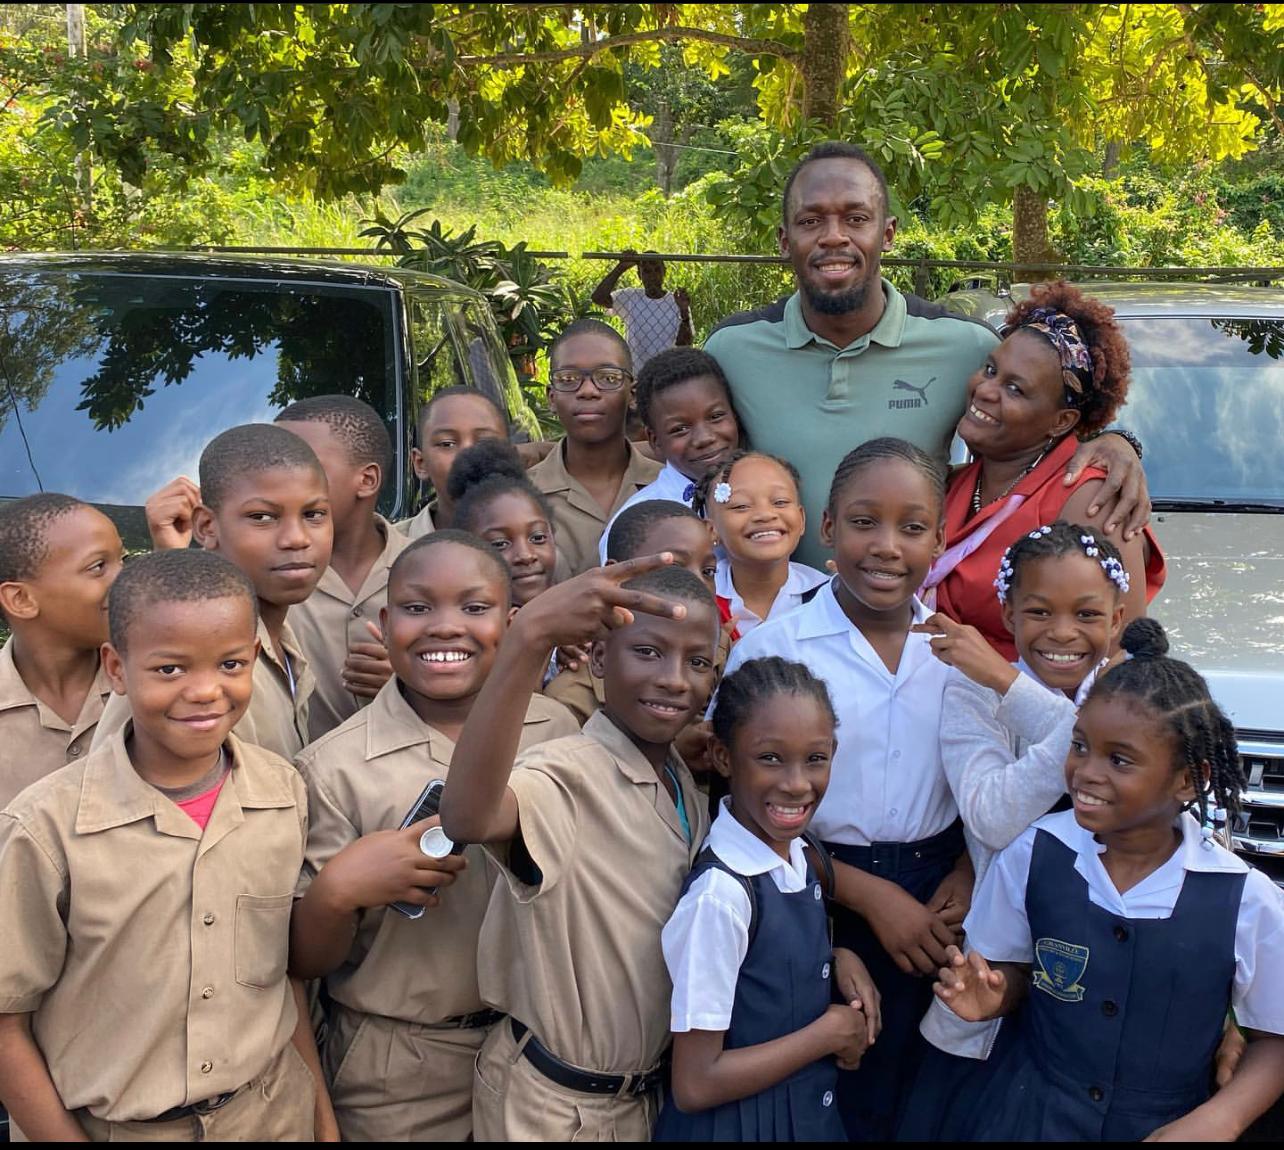 Usain Bolt Foundation donates laptops to Jamaican schools